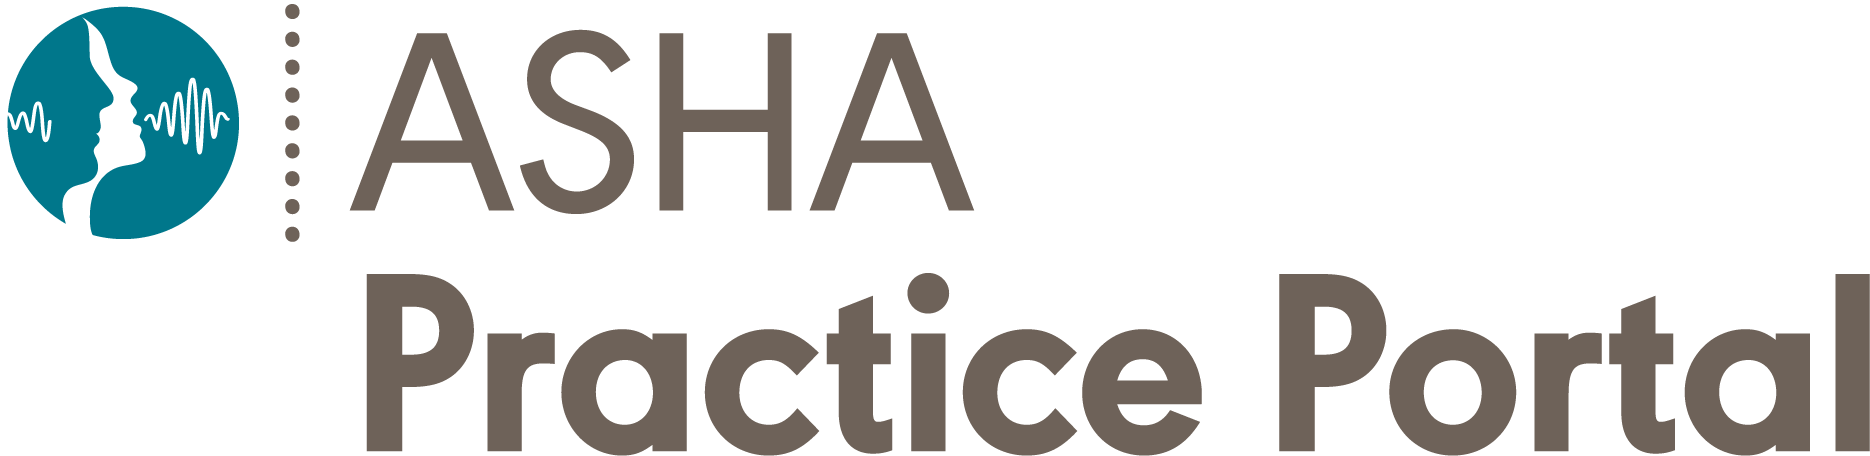 Practice Portal logo